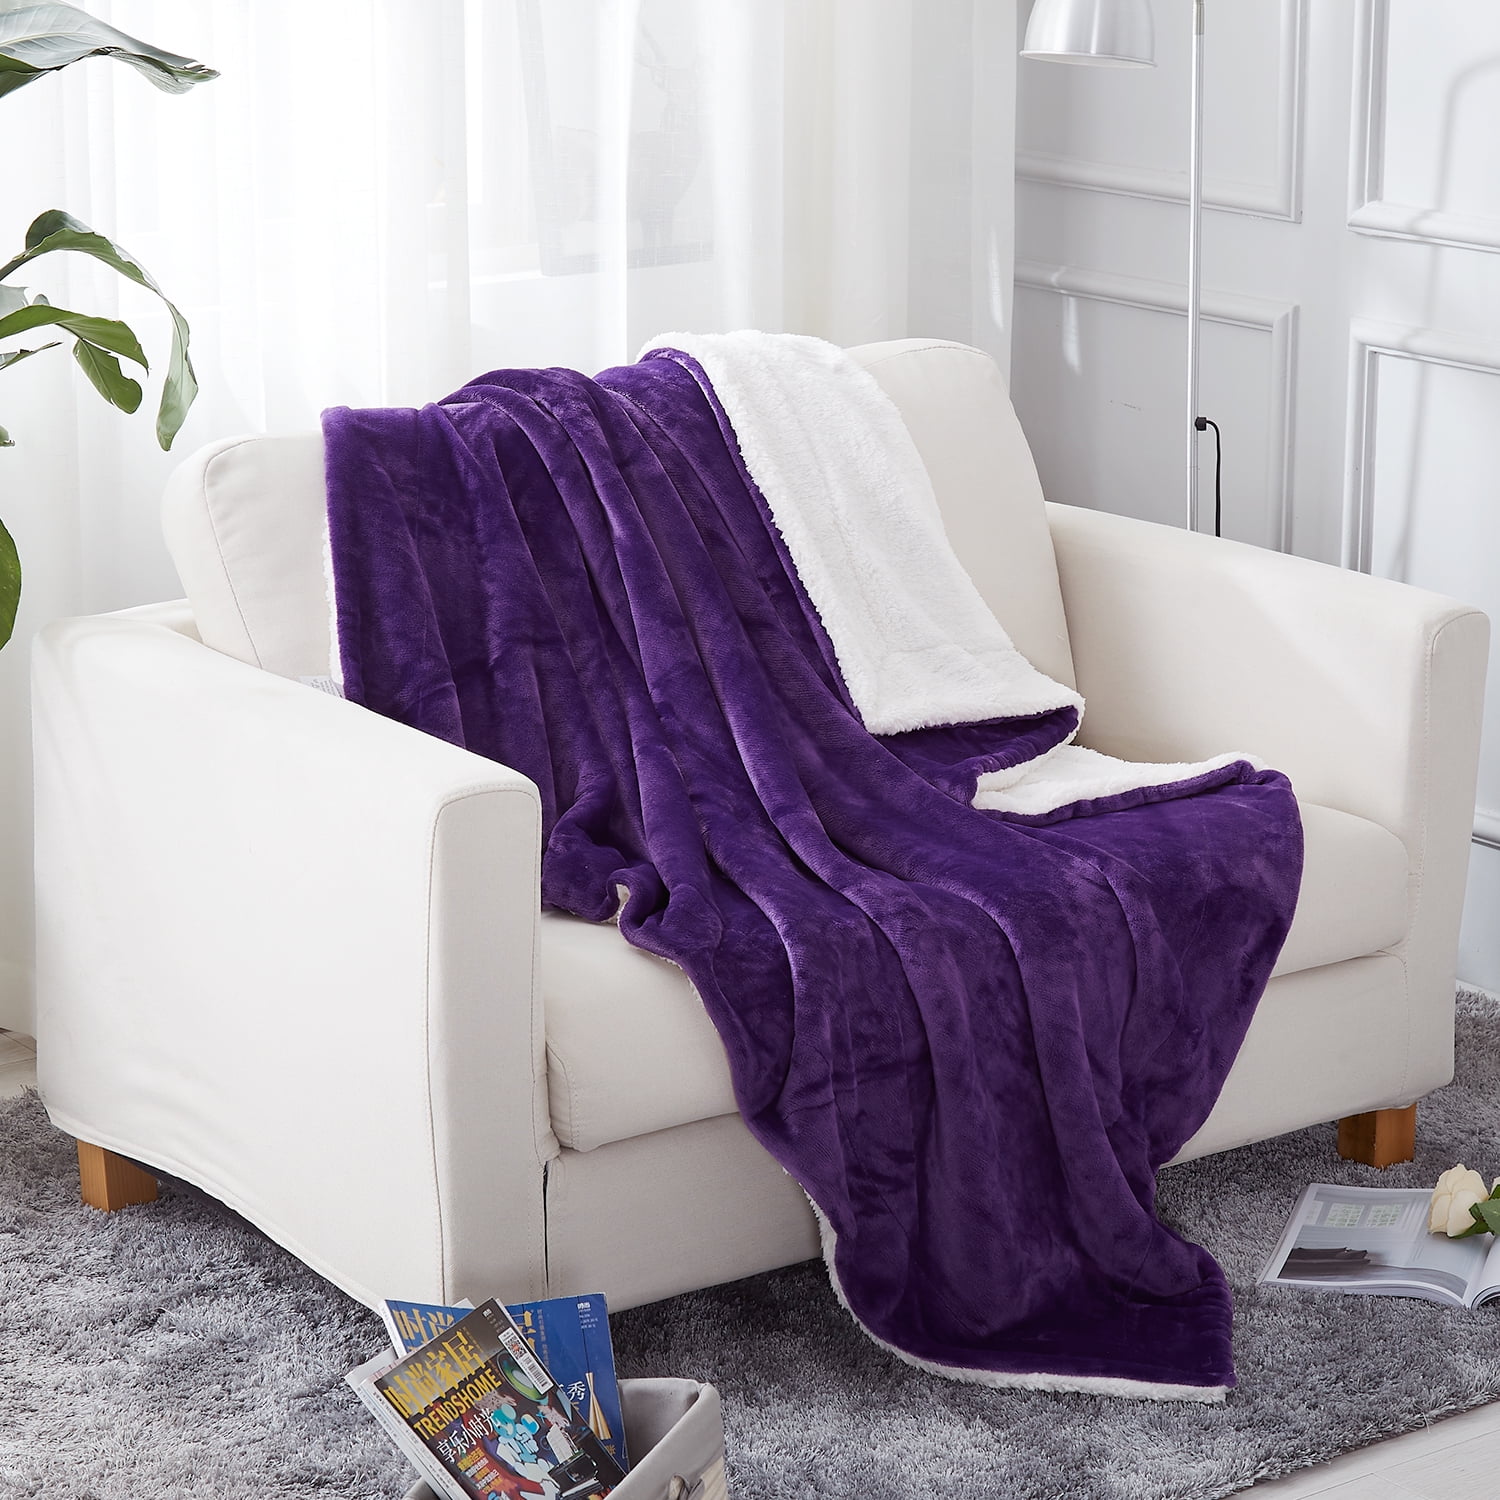 Sherpa Fleece Blanket Sofa Bed Throw Soft Warm Snuggle Blanket Burgundy King All 